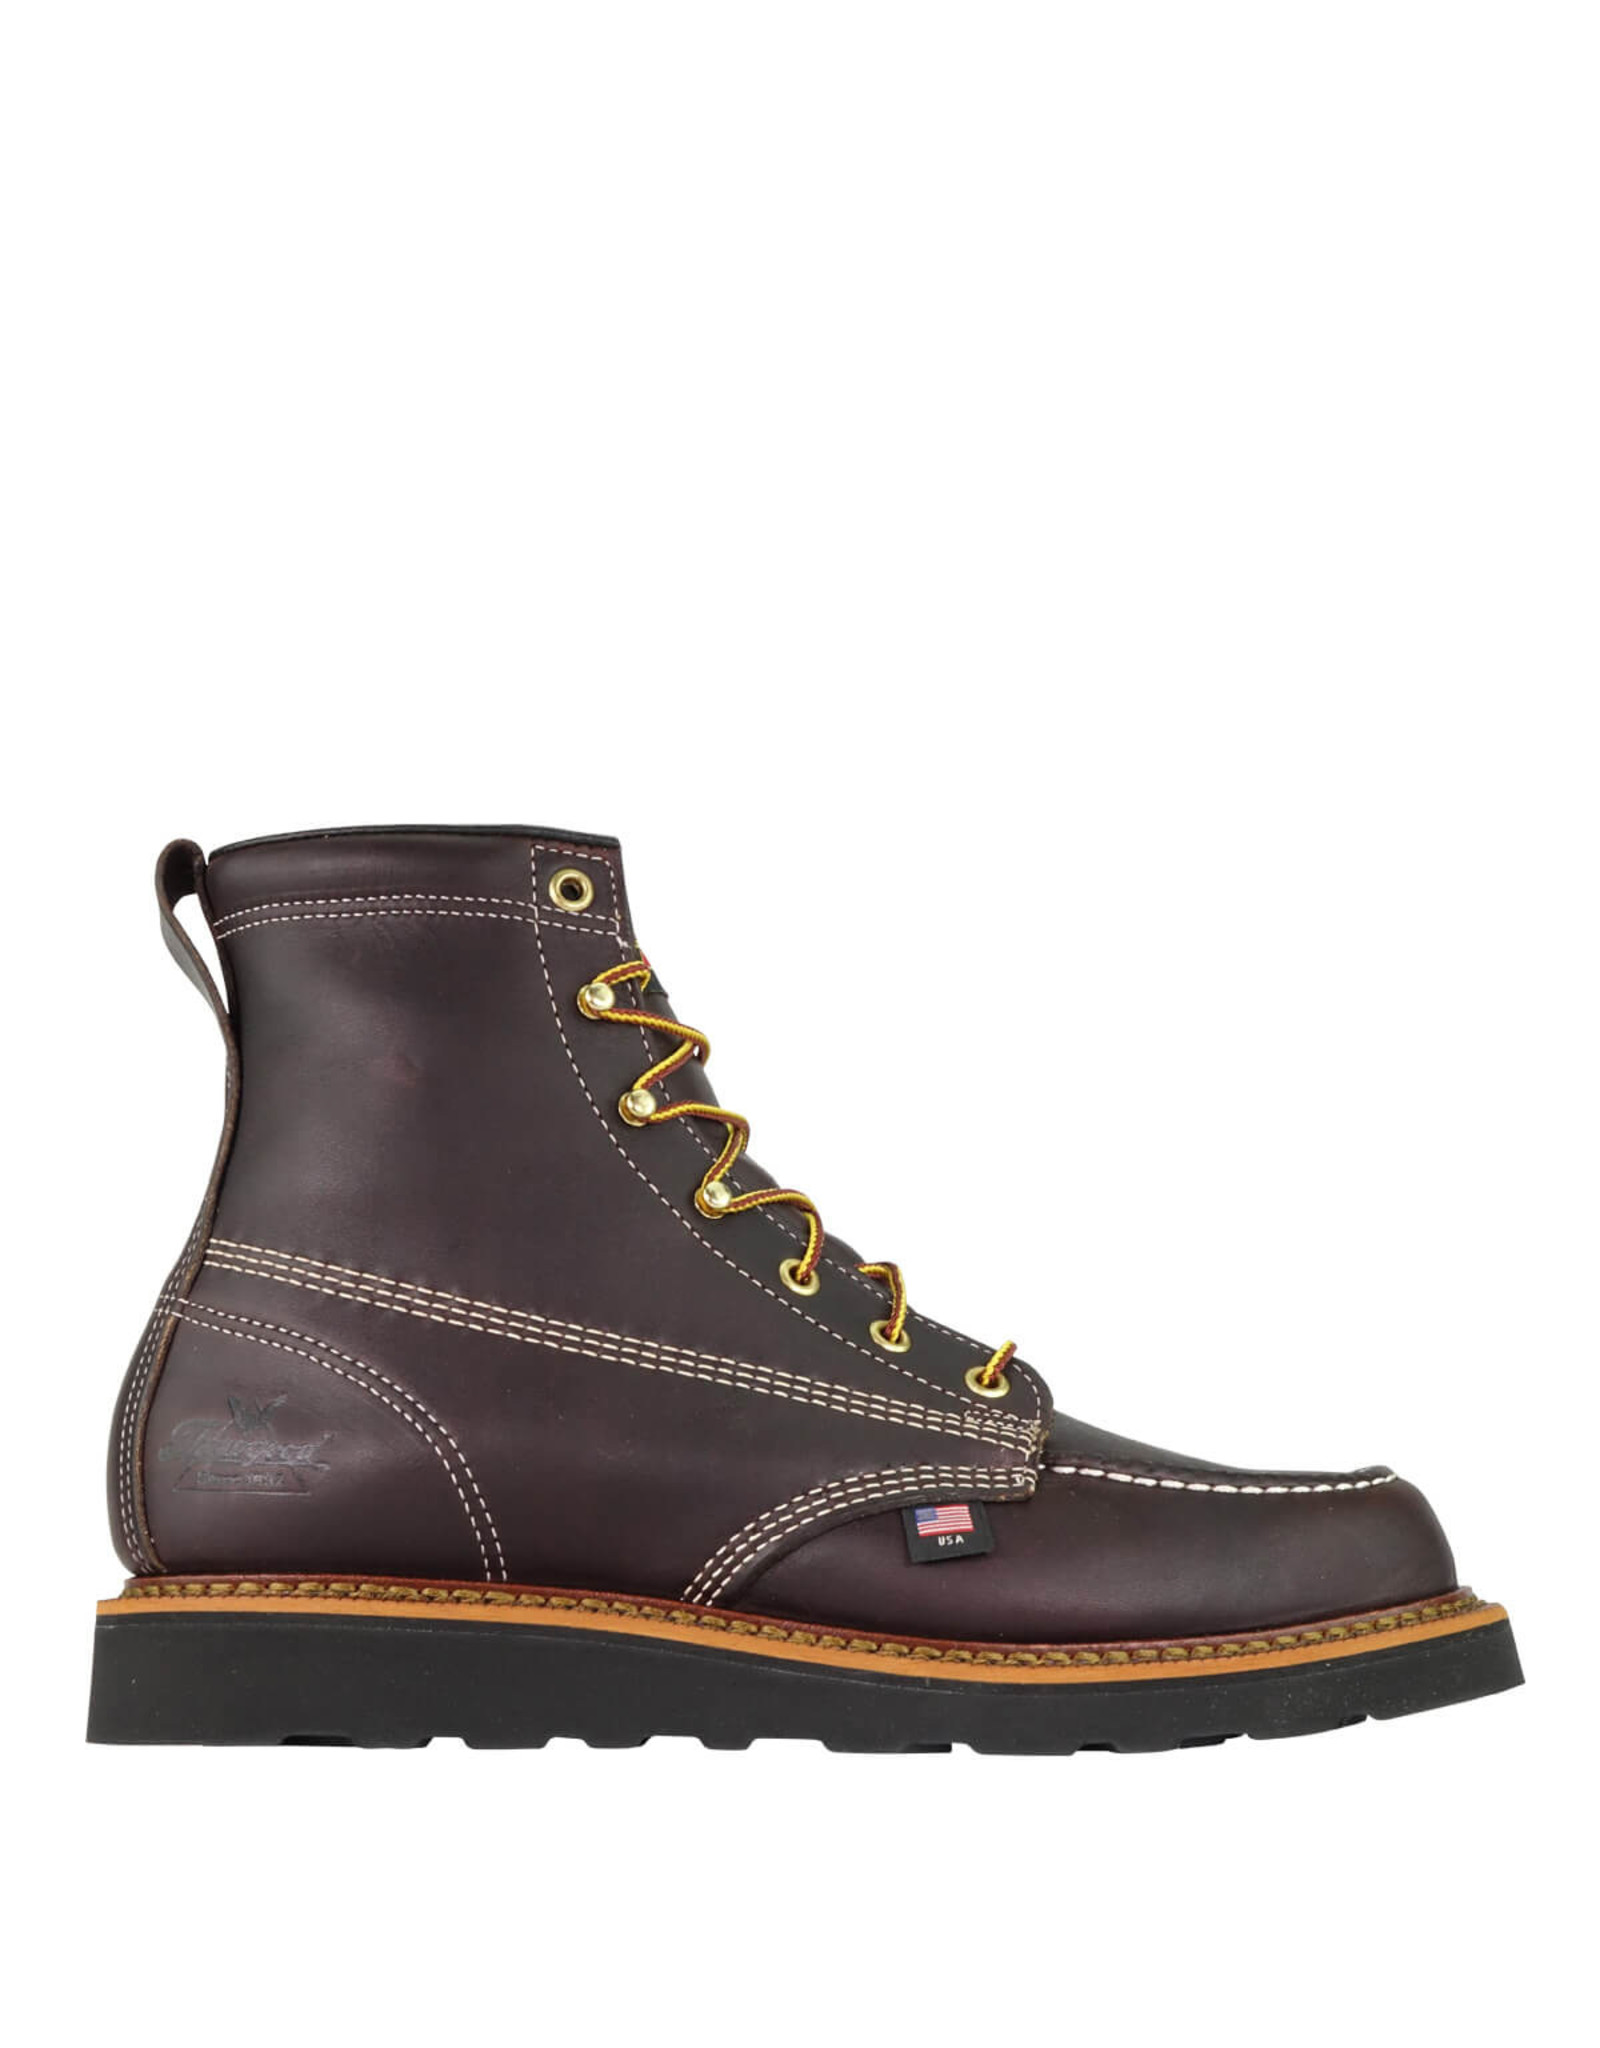 Boots-Men THOROGOOD 814-4266 American Heritage 6in Moc- Black Wedge